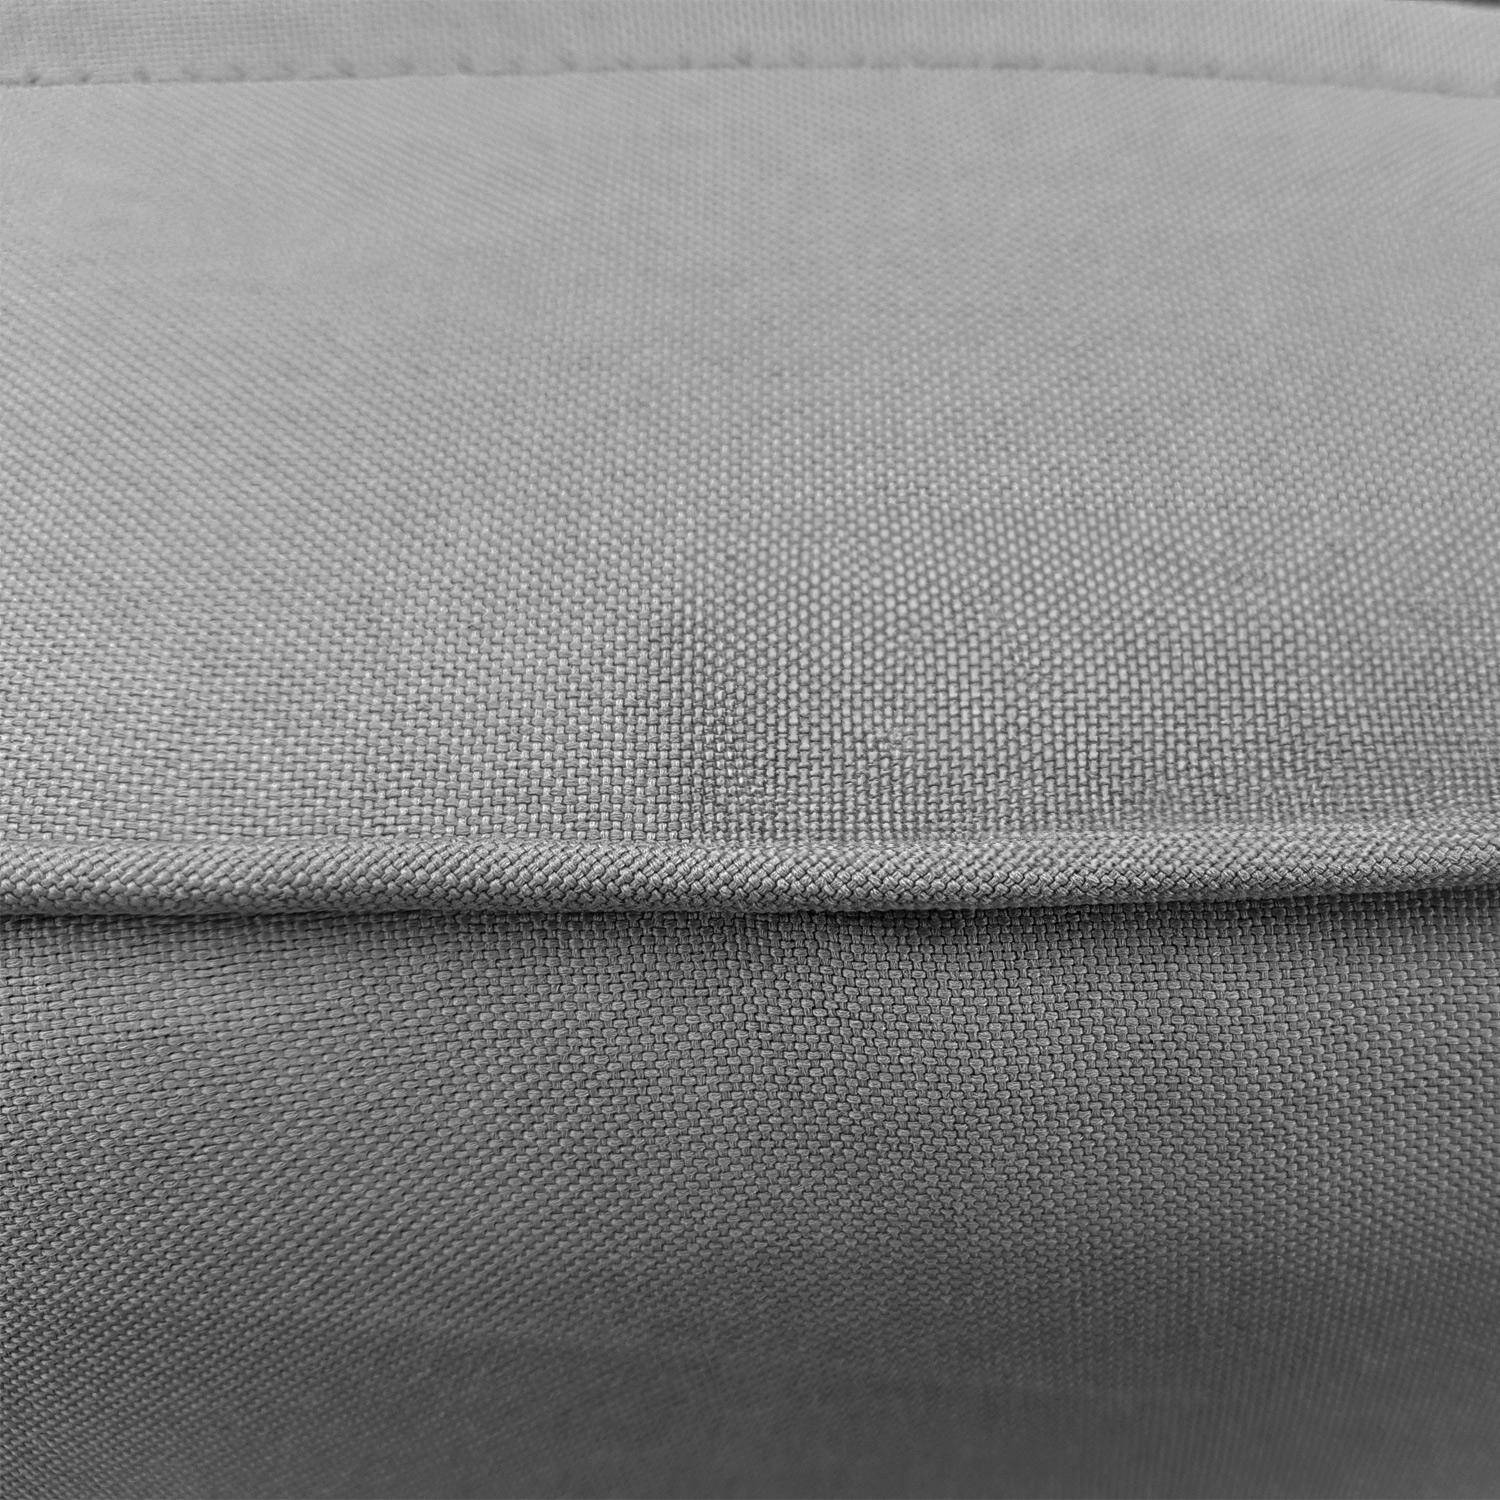 Cushion cover set for Mendoza sofa set - grey polyester, complete set Photo2